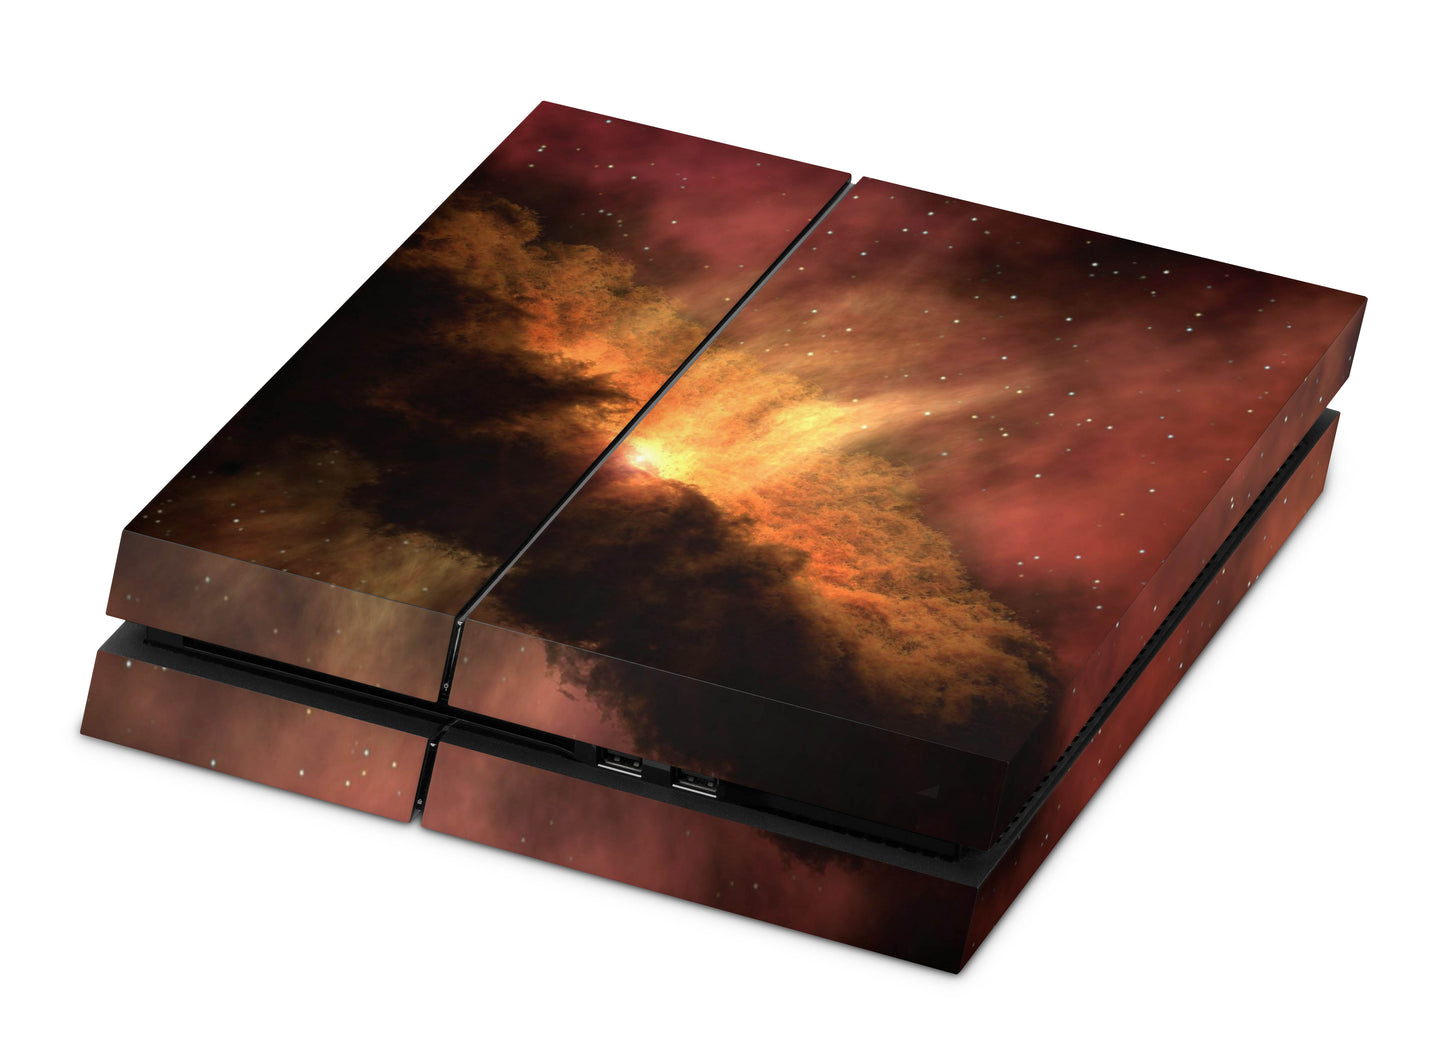 Playstation 4 Skin & Wrap Design Aufkleber Folie für PS4 Konsole 1.Generation solar storm Aufkleber skins4u   